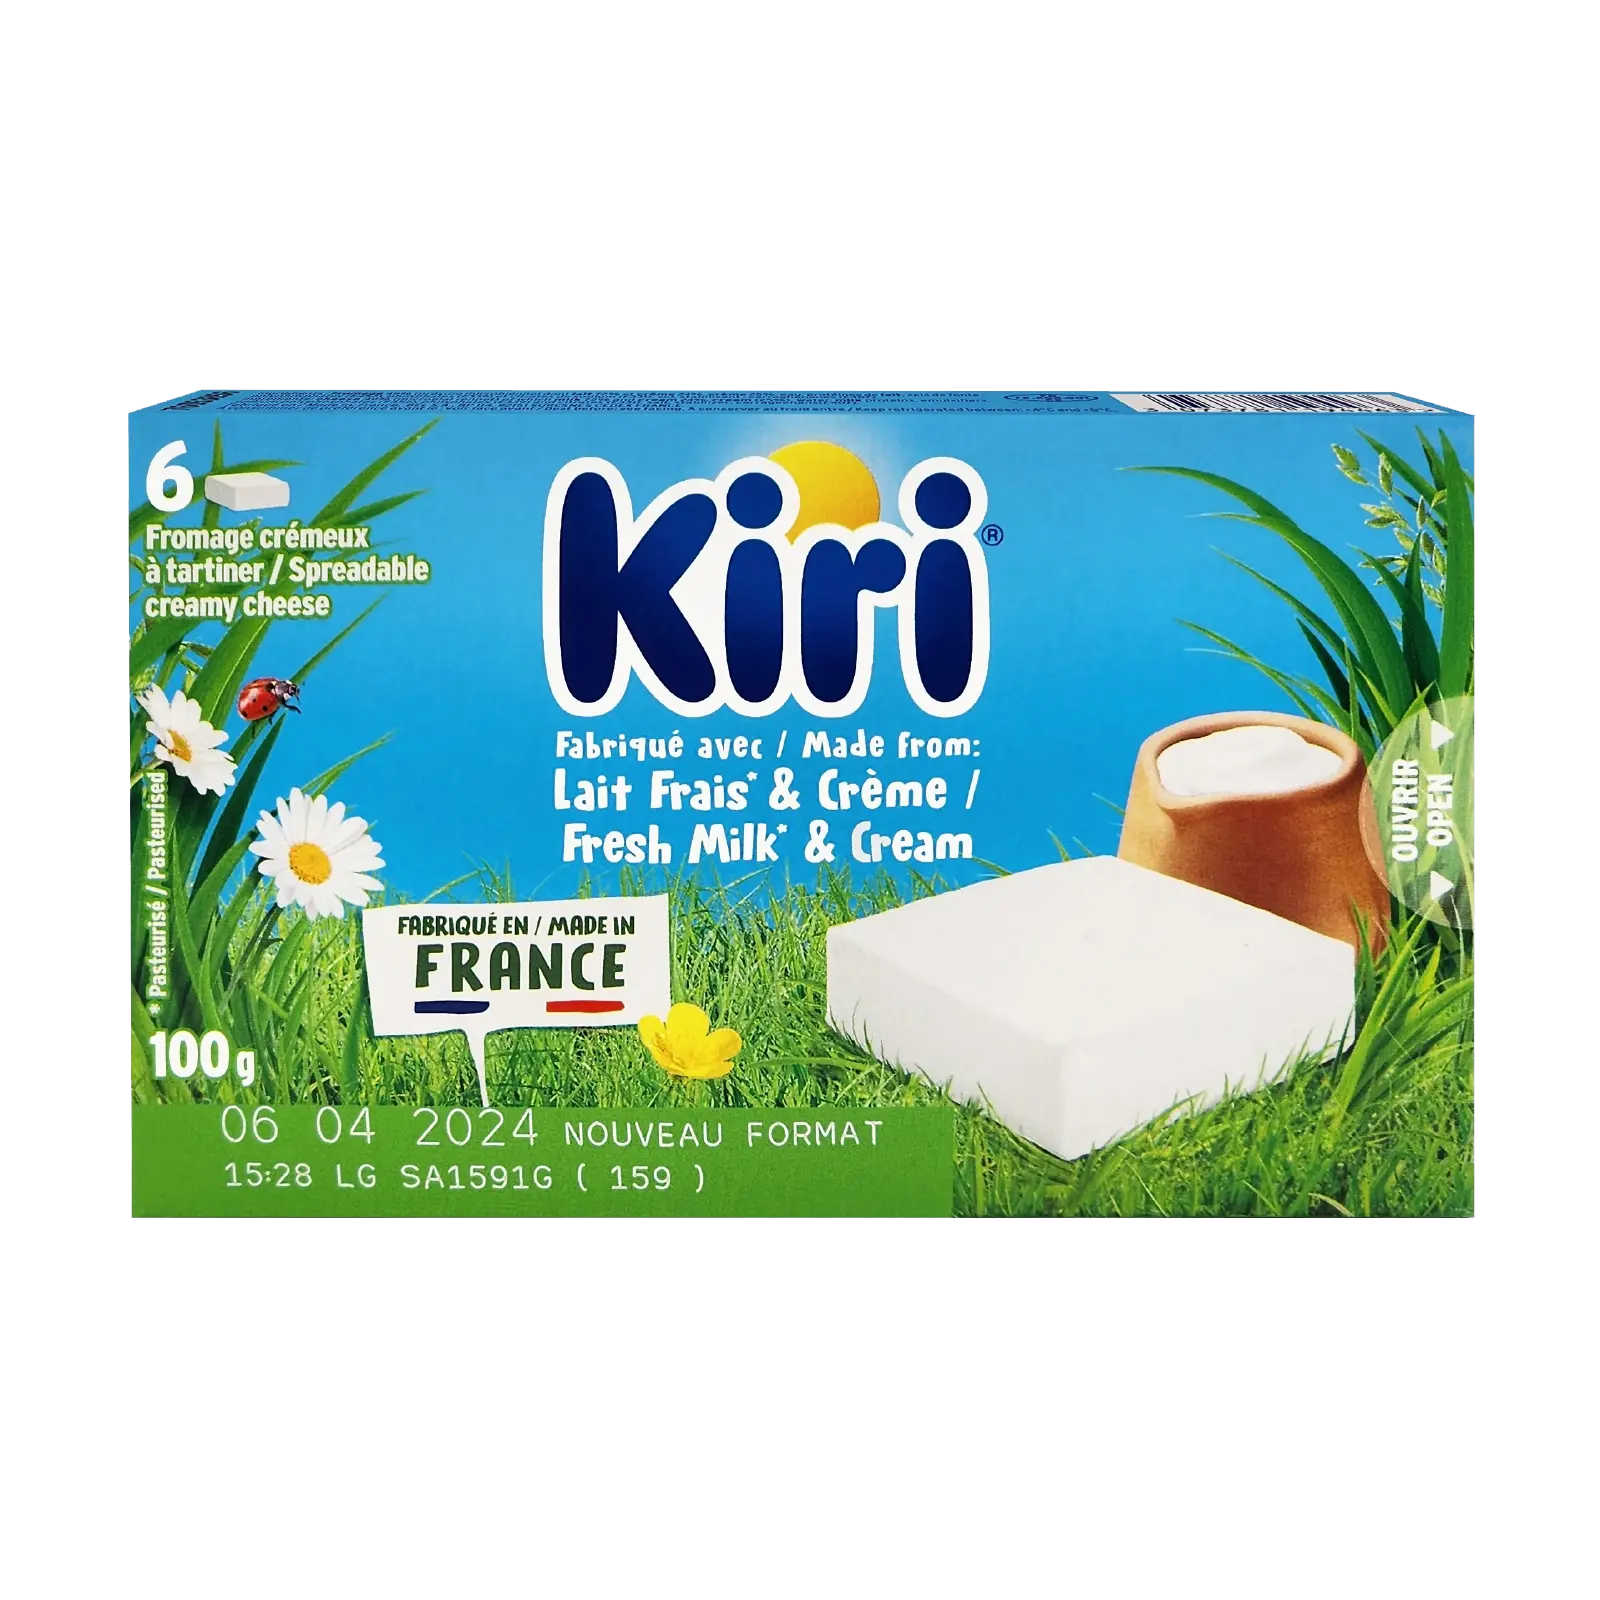 Kiri product image updated